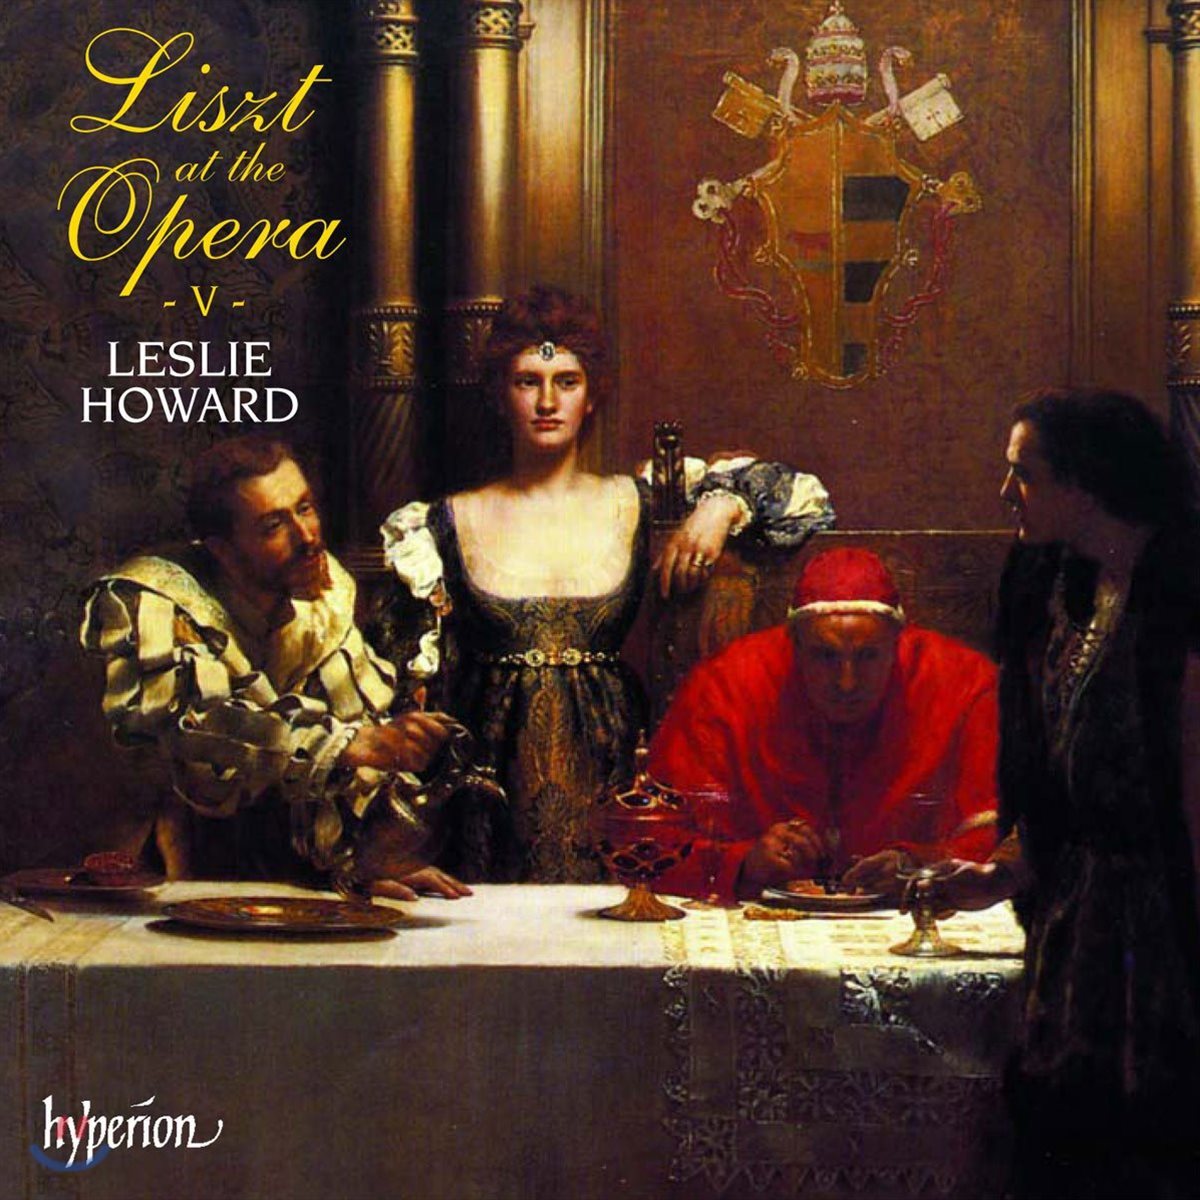 Leslie Howard 리스트: 오페라에서, 5권 (Liszt: at the Opera 5)